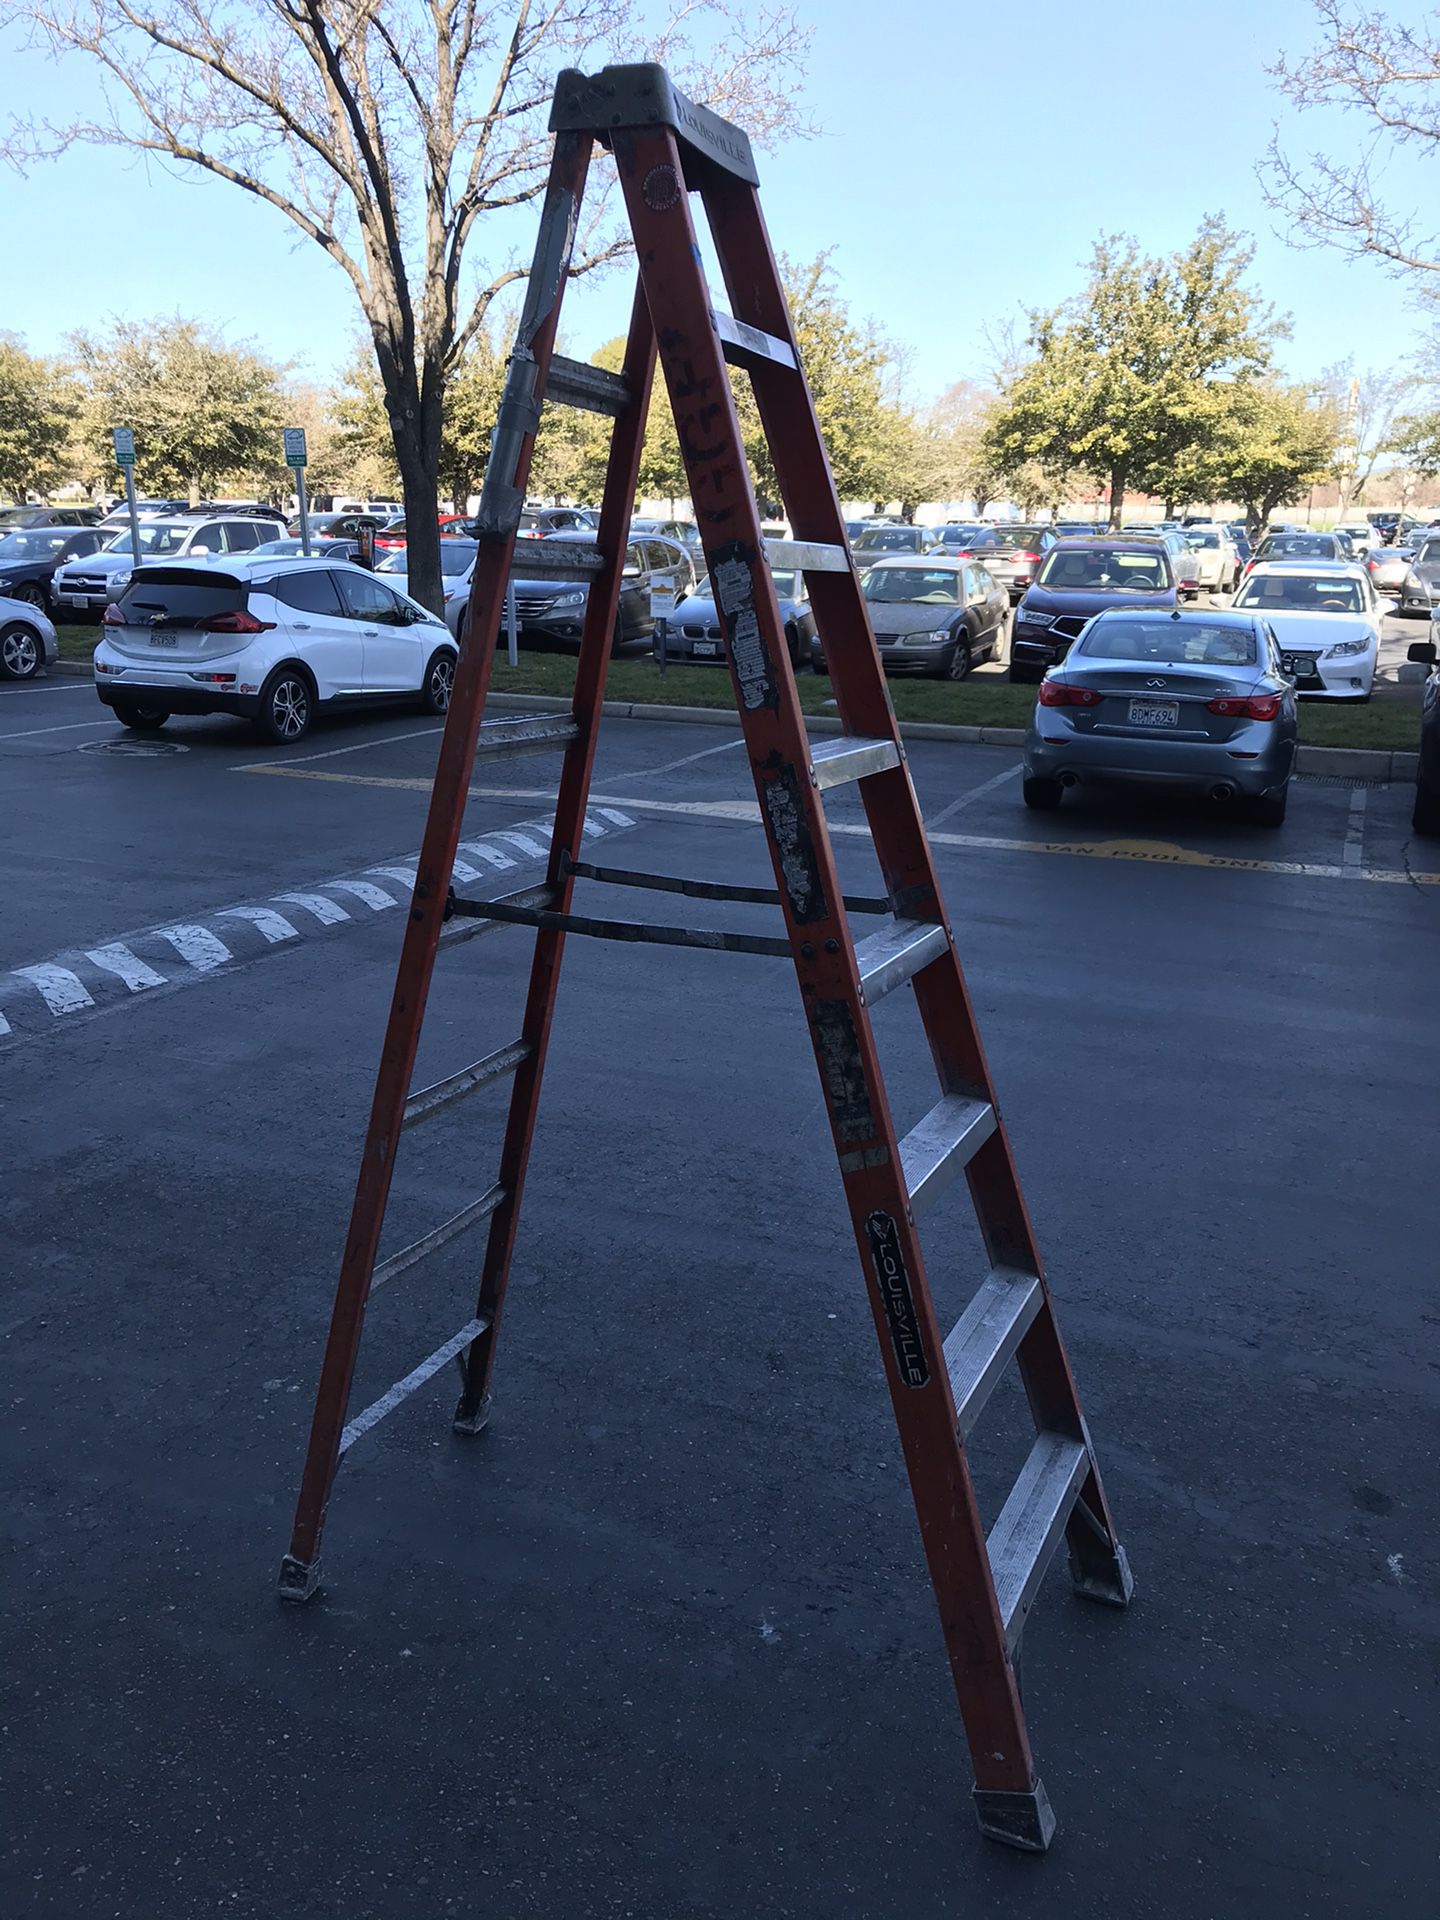 8’ ladder